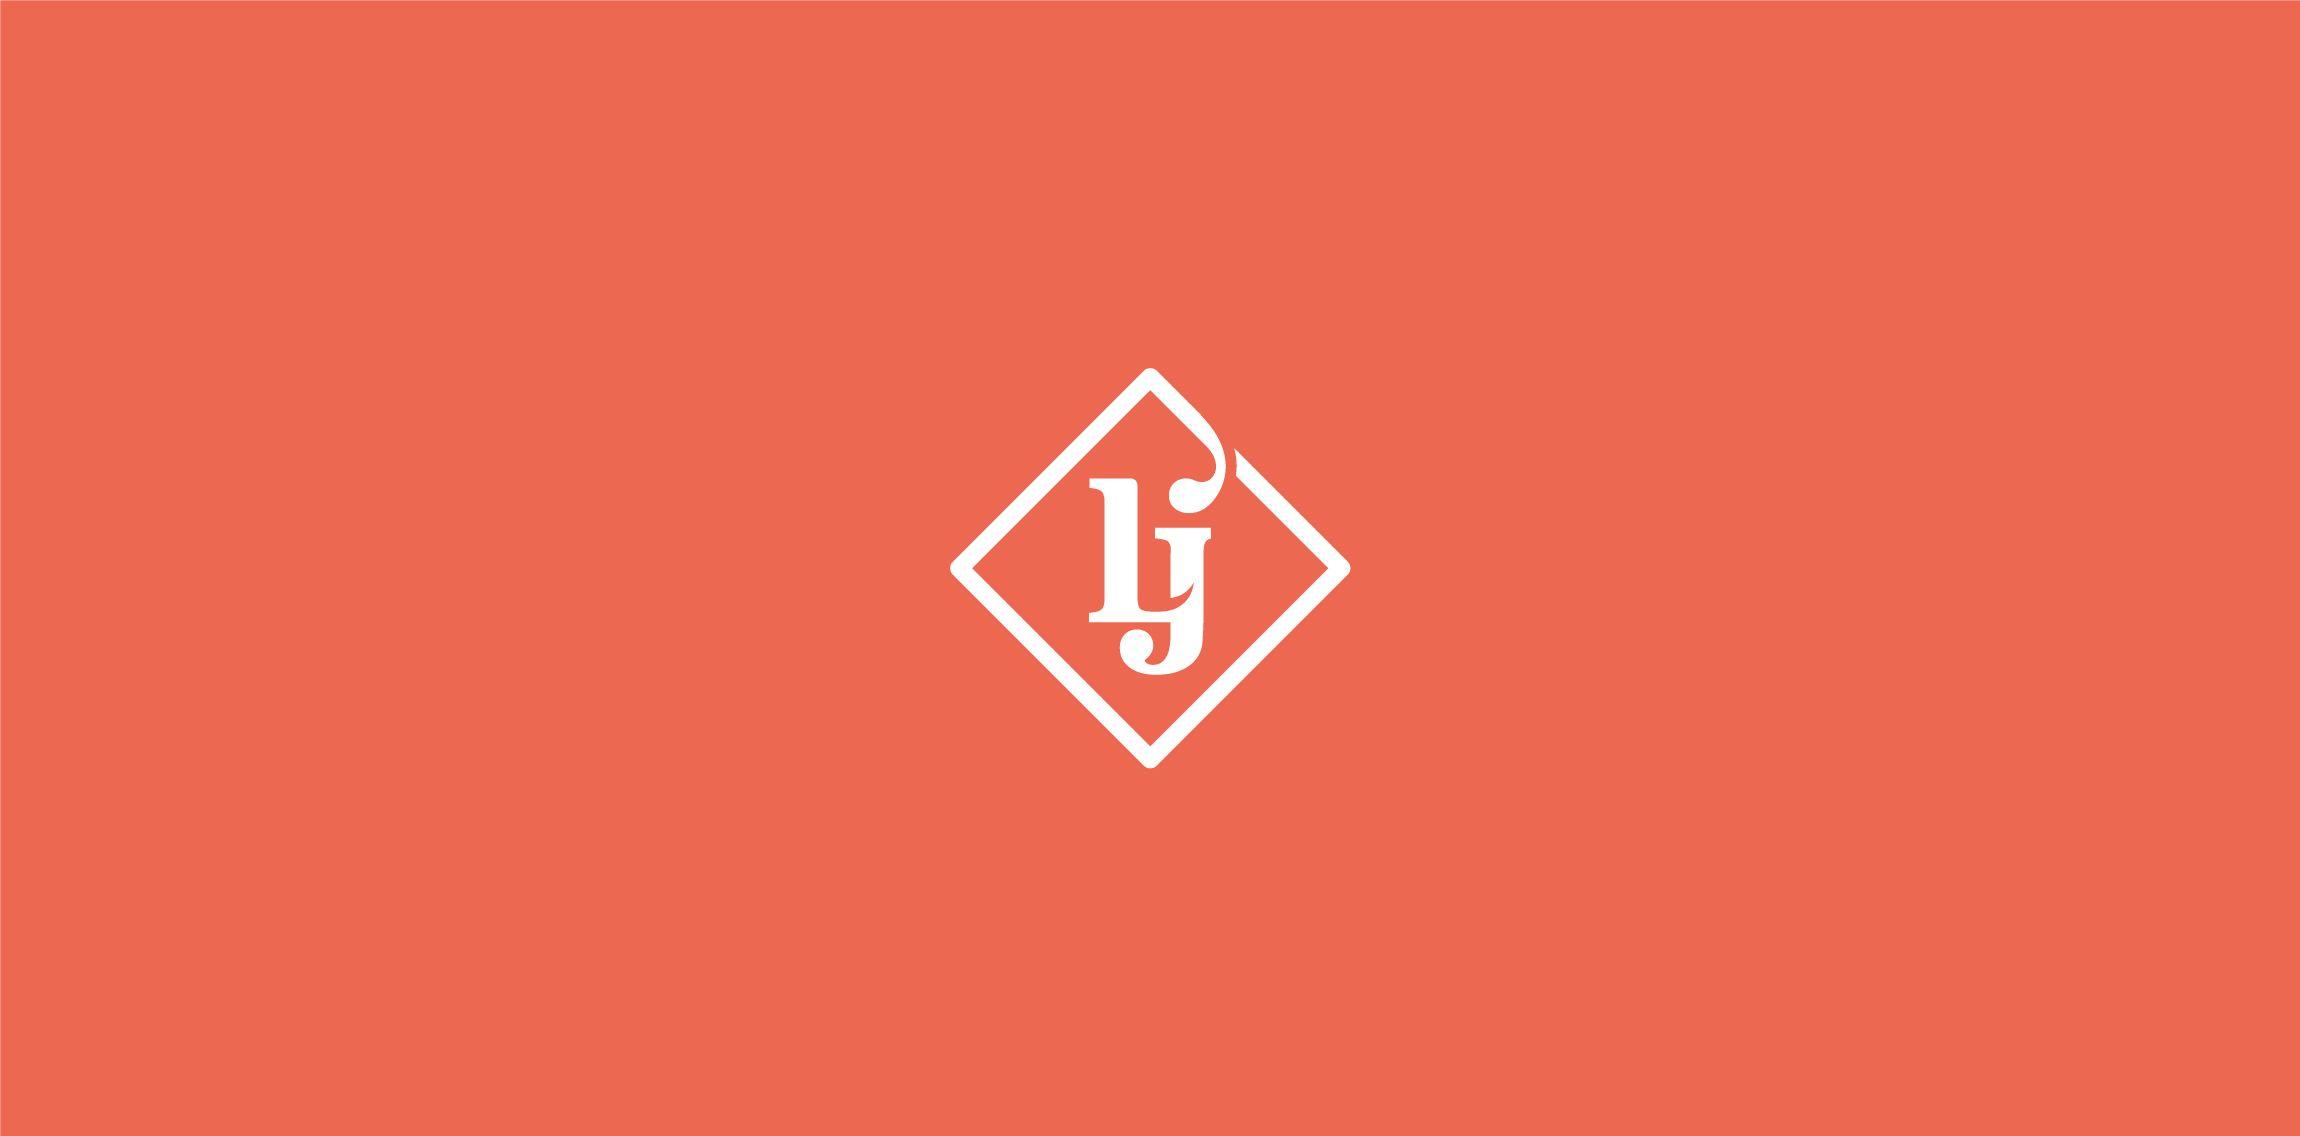 LJ Logo - LJ logo | Logos | Logo inspiration, Logos design, Diamond logo